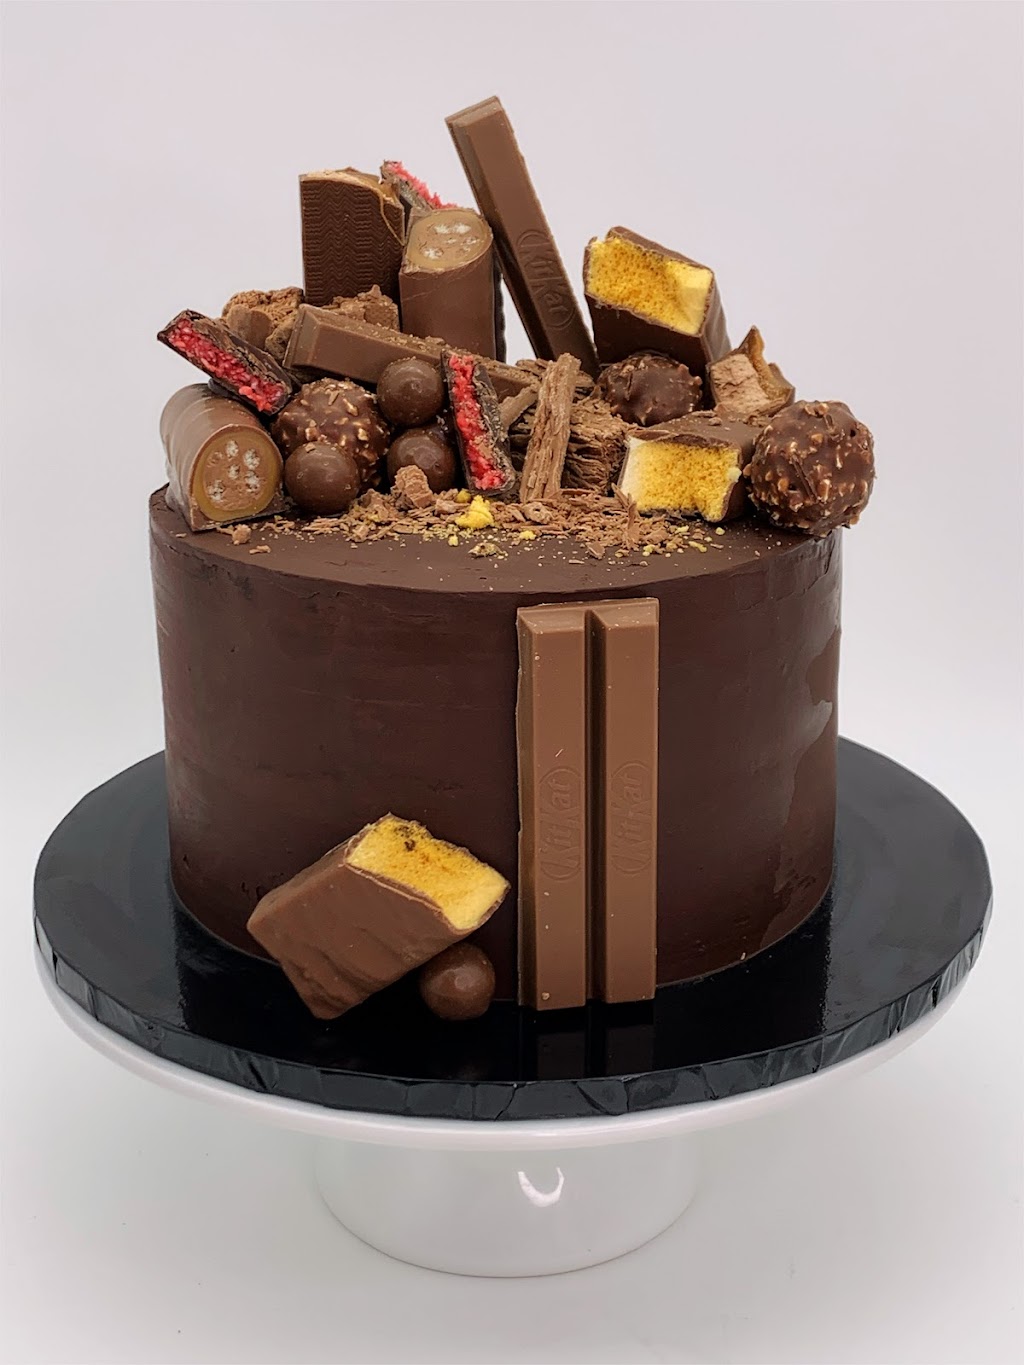 Little Bake Creative | bakery | 10 Old Belair Rd, Belair SA 5052, Australia | 0403003338 OR +61 403 003 338